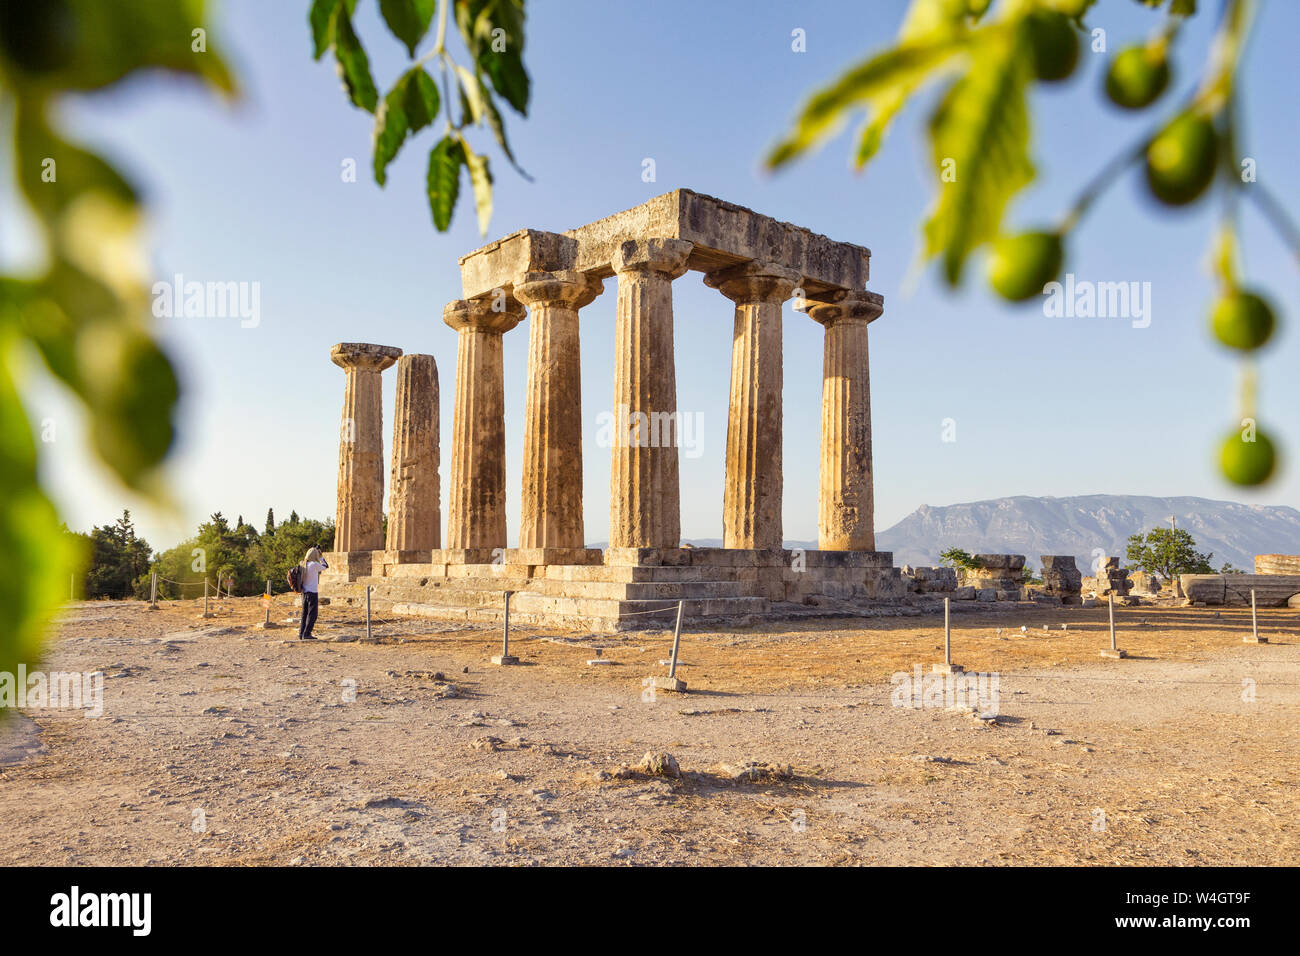 Archaic Temple of Apollo, Dorian columns, Corinth, Greece Stock Photo